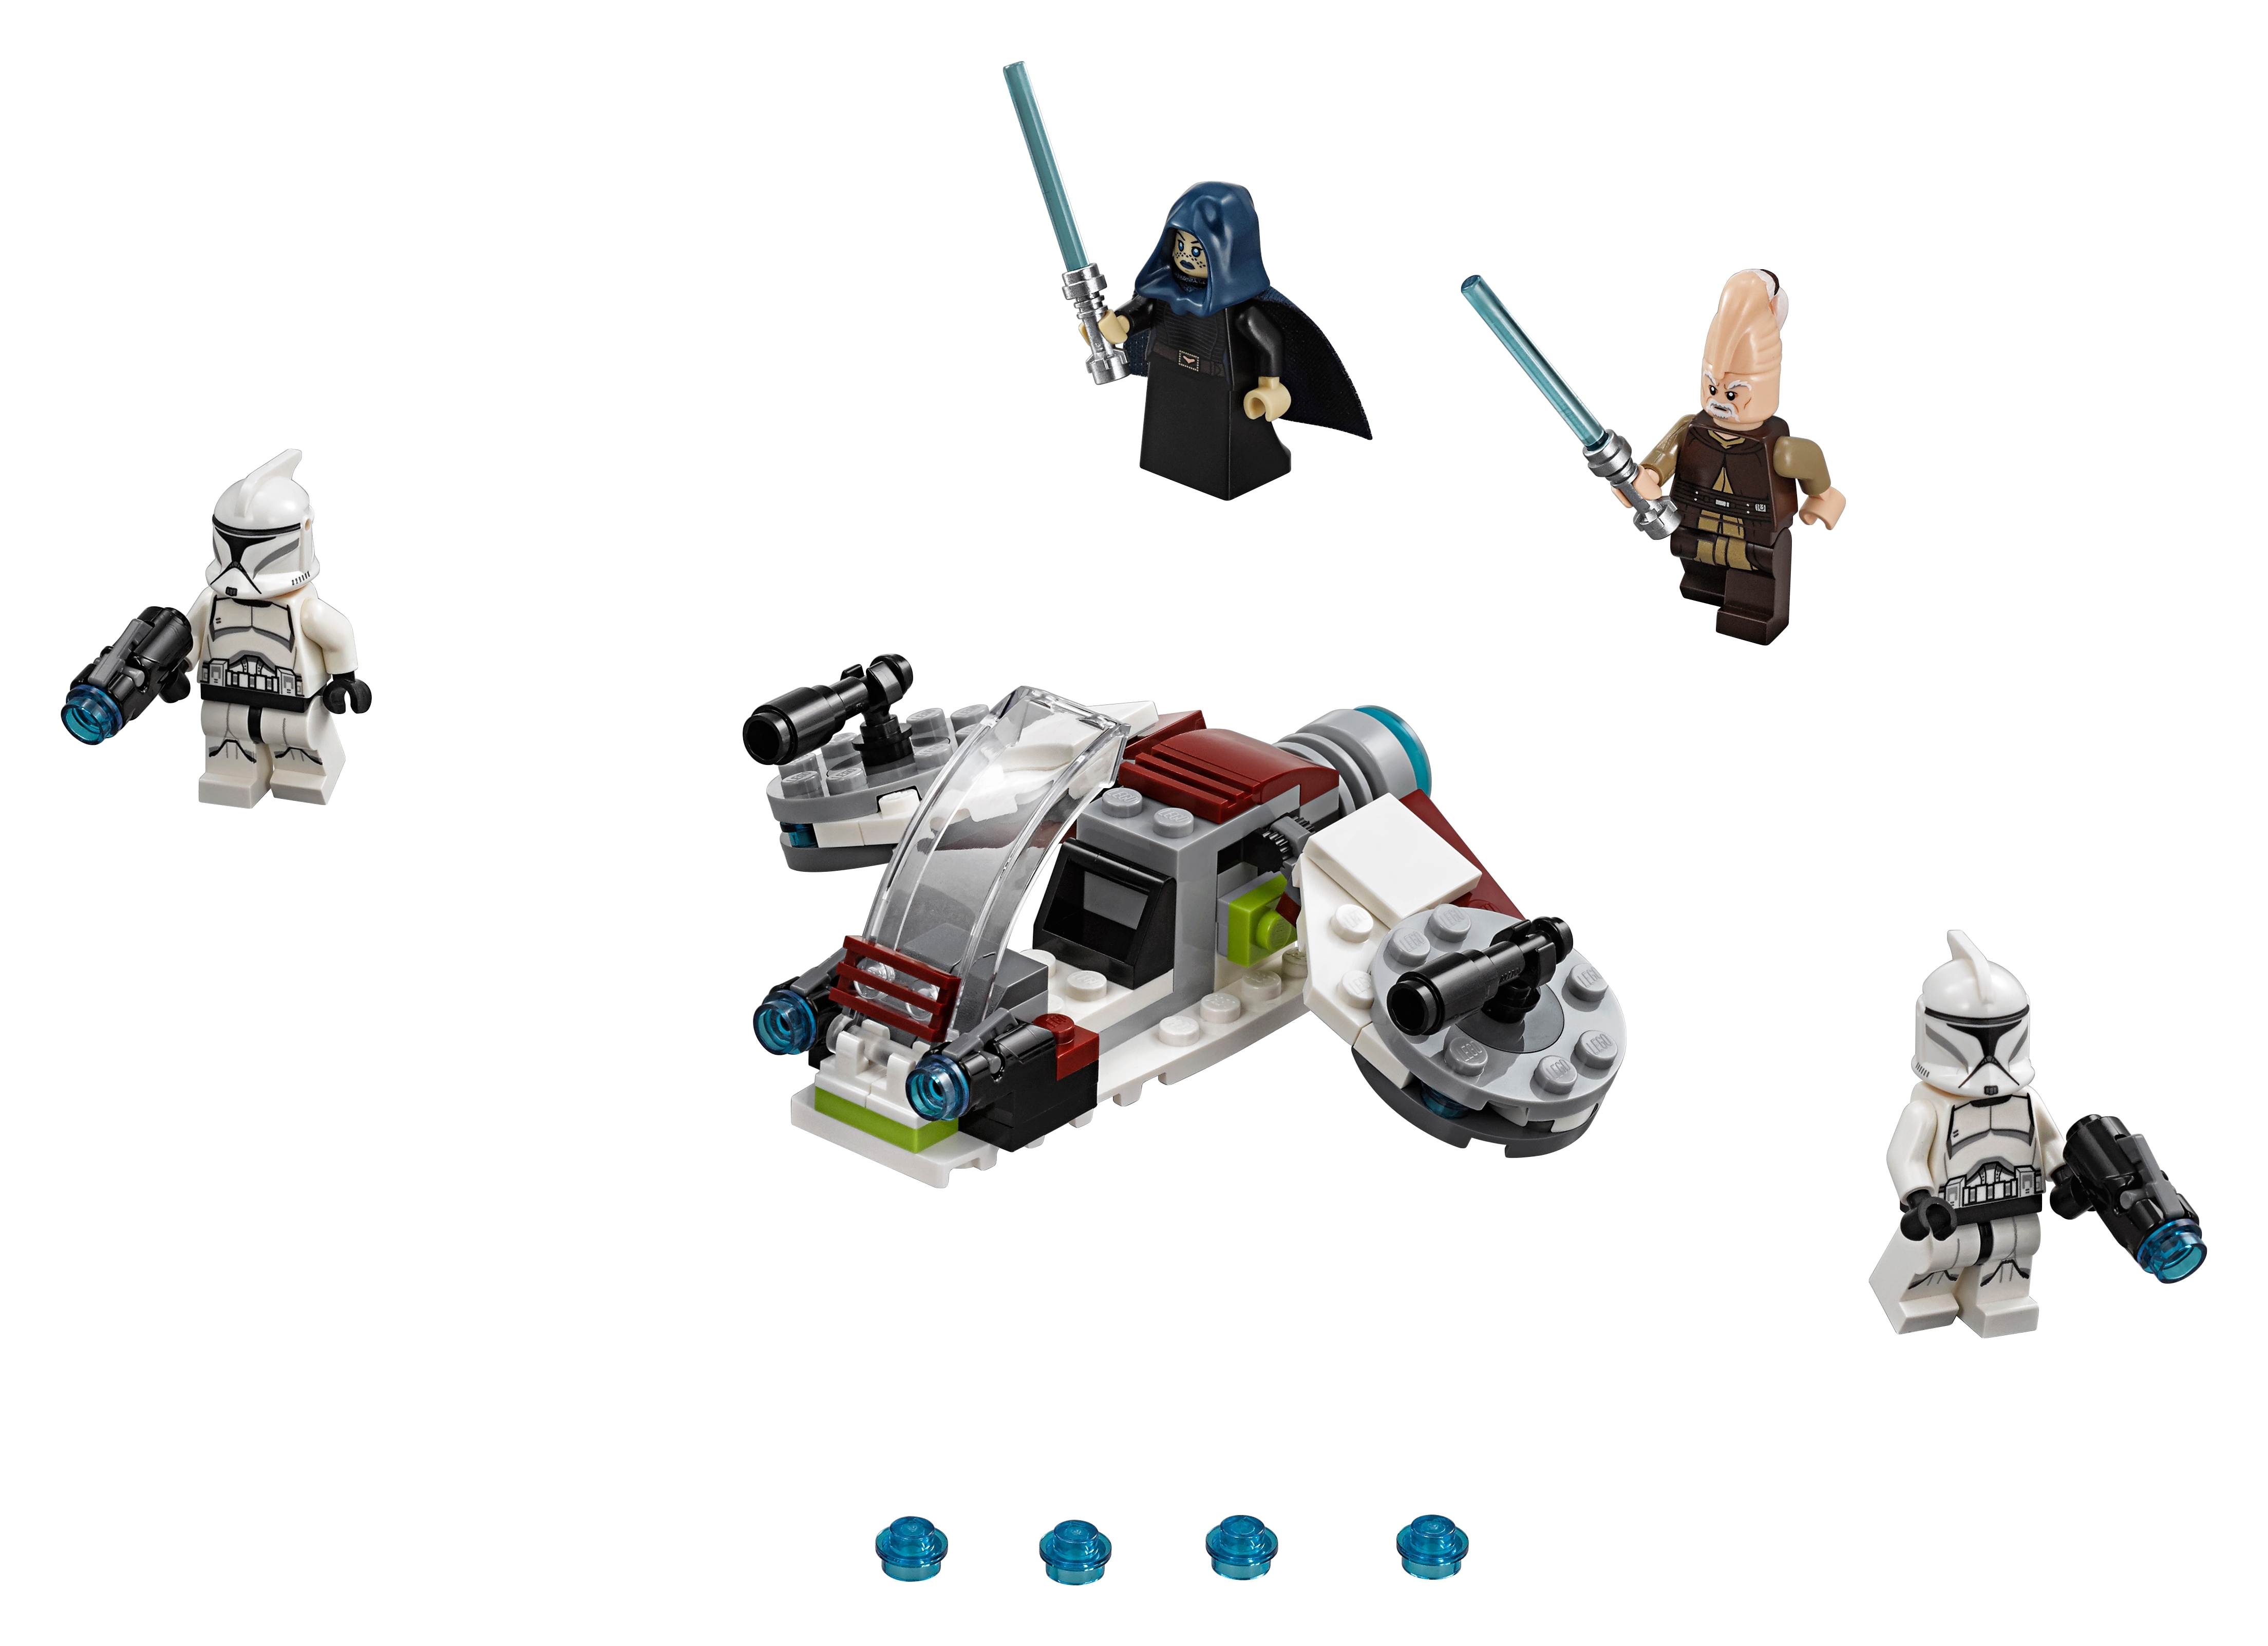 New! LEGO 75206 Star Wars Jedi & Clone Troopers Battle Pack Clone Trooper MF